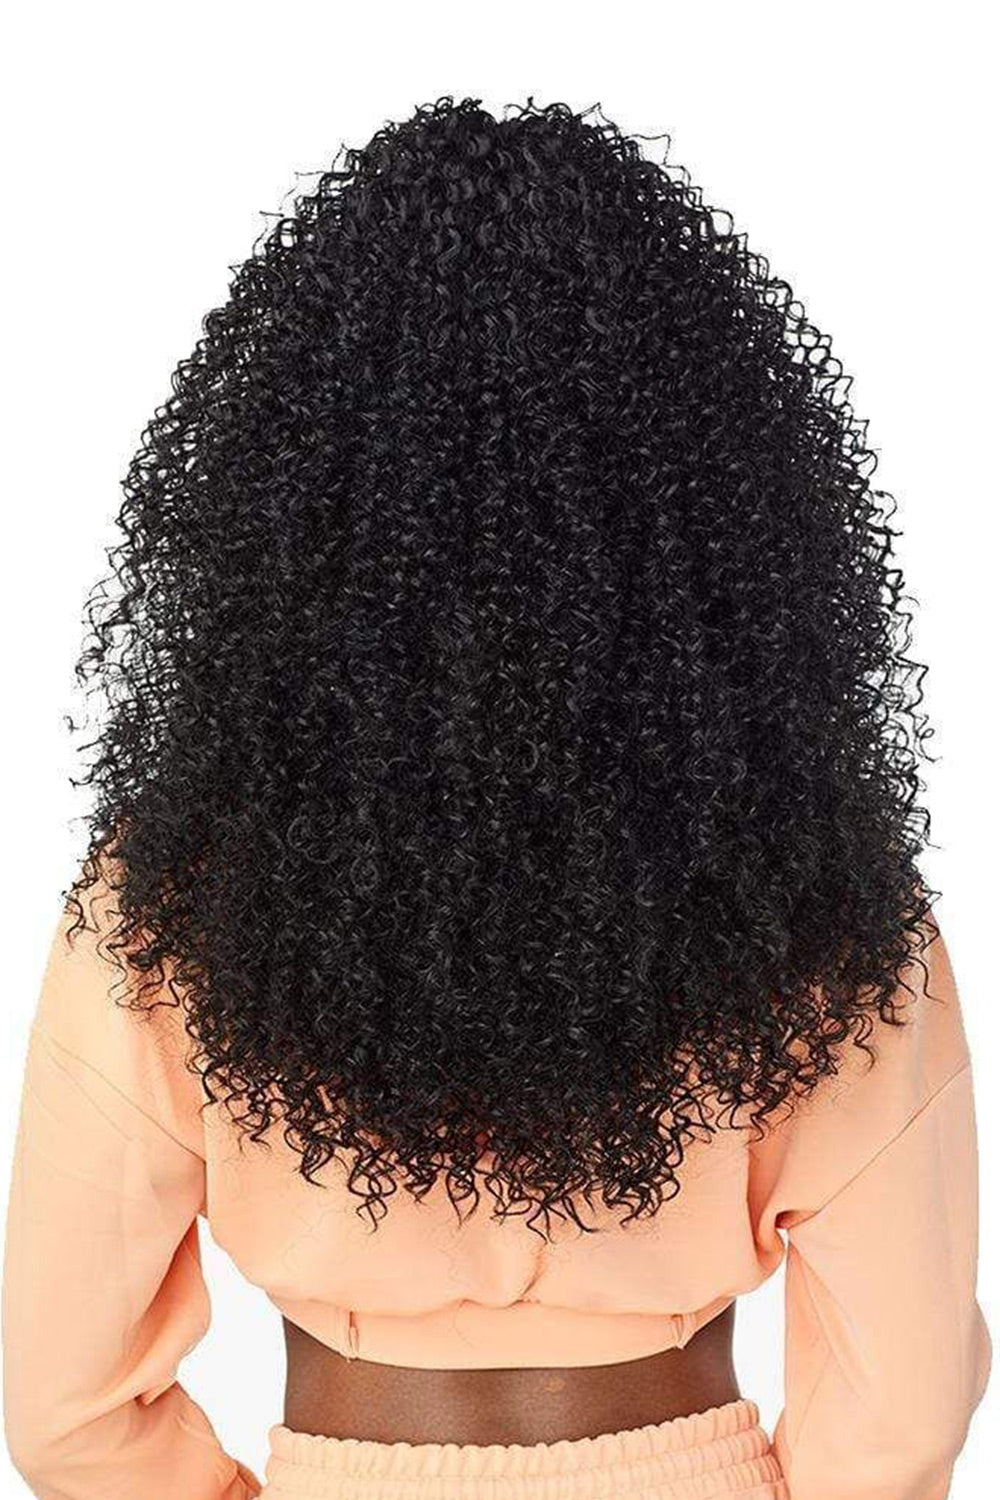 Black Women I Tip Loose Wave Human Hair Extensions